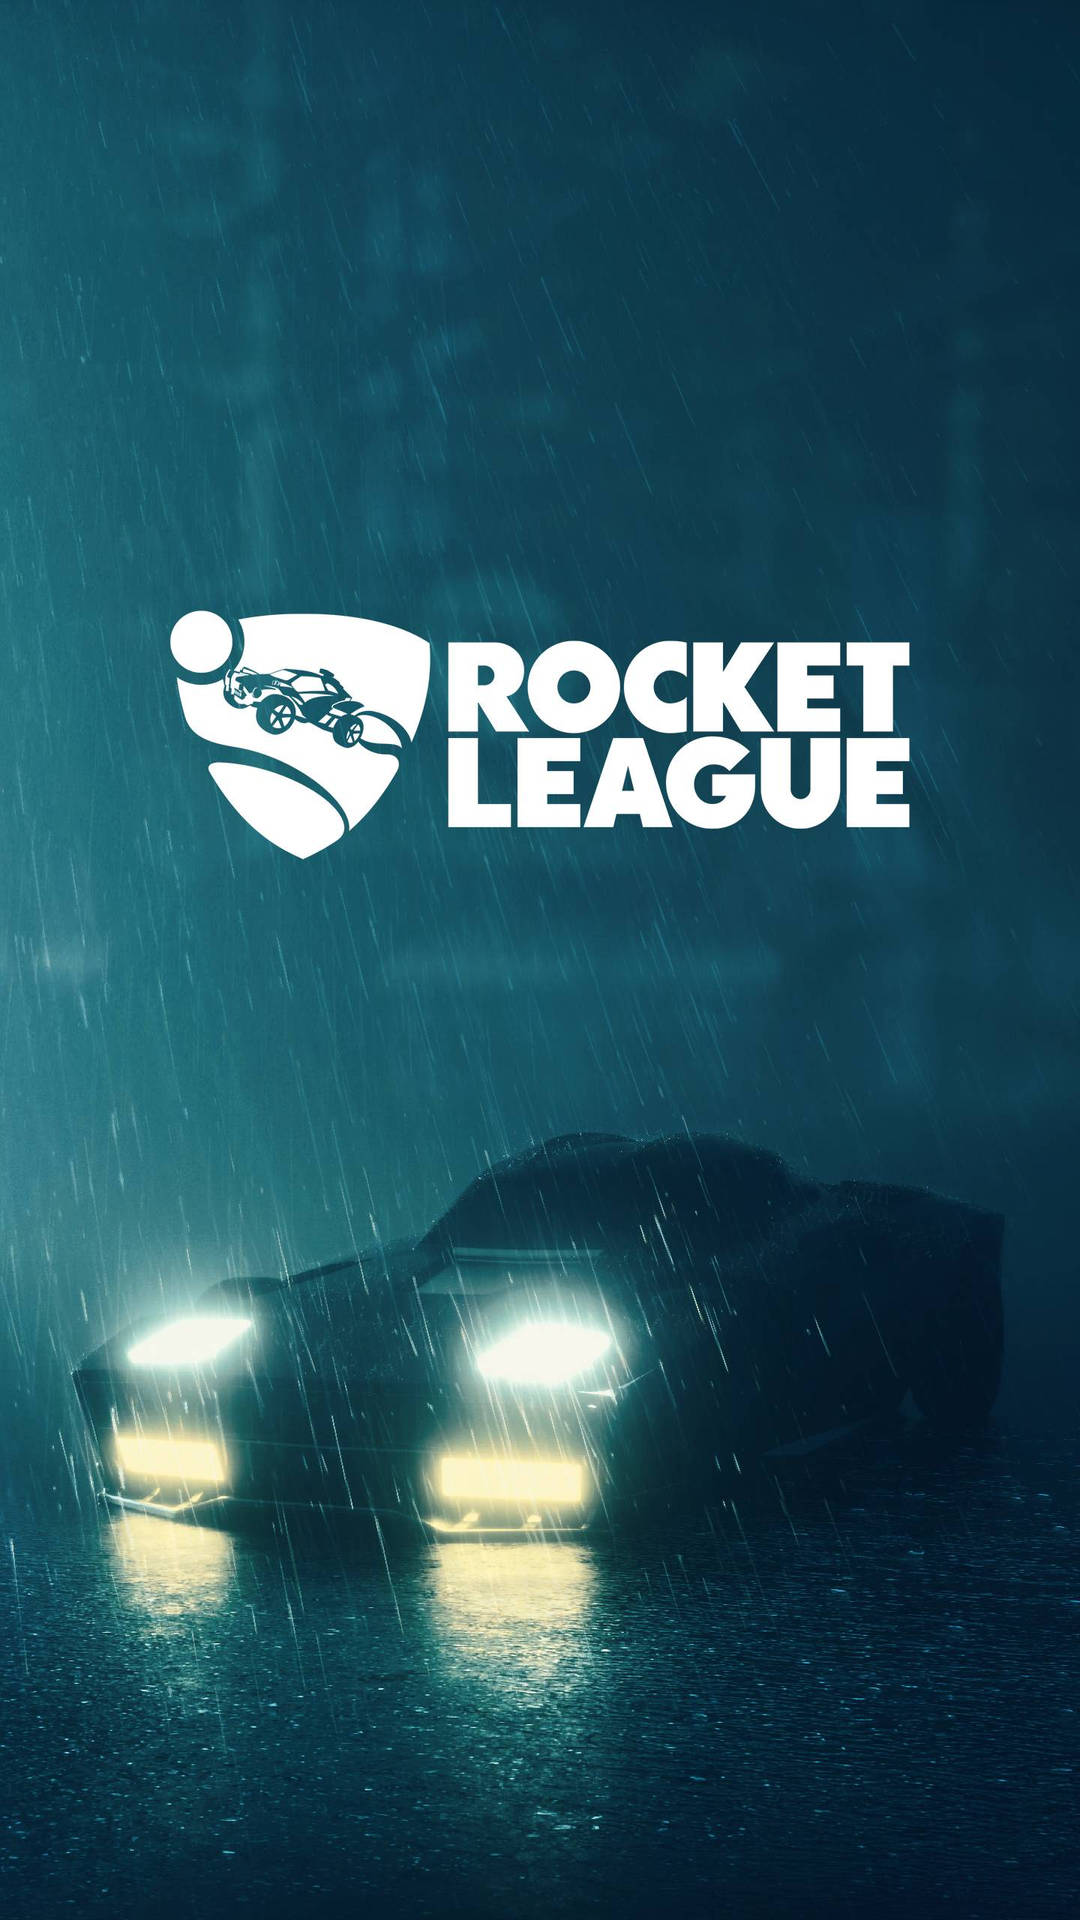 Parked Breakout Car Rocket League Iphone Wallpaper